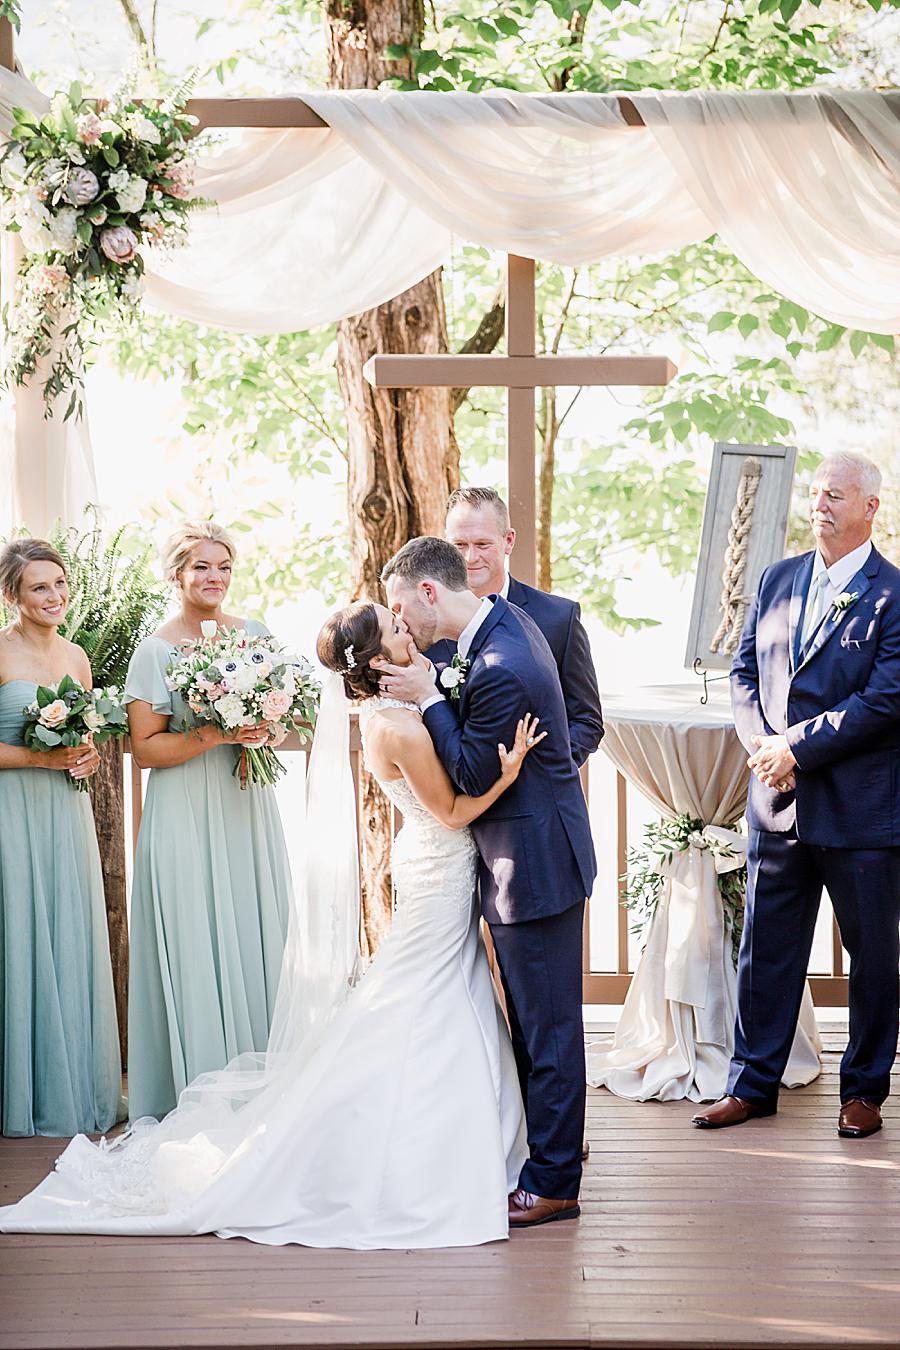 You may kiss the bride at this pavilion wedding by Knoxville Wedding Photographer, Amanda May Photos.